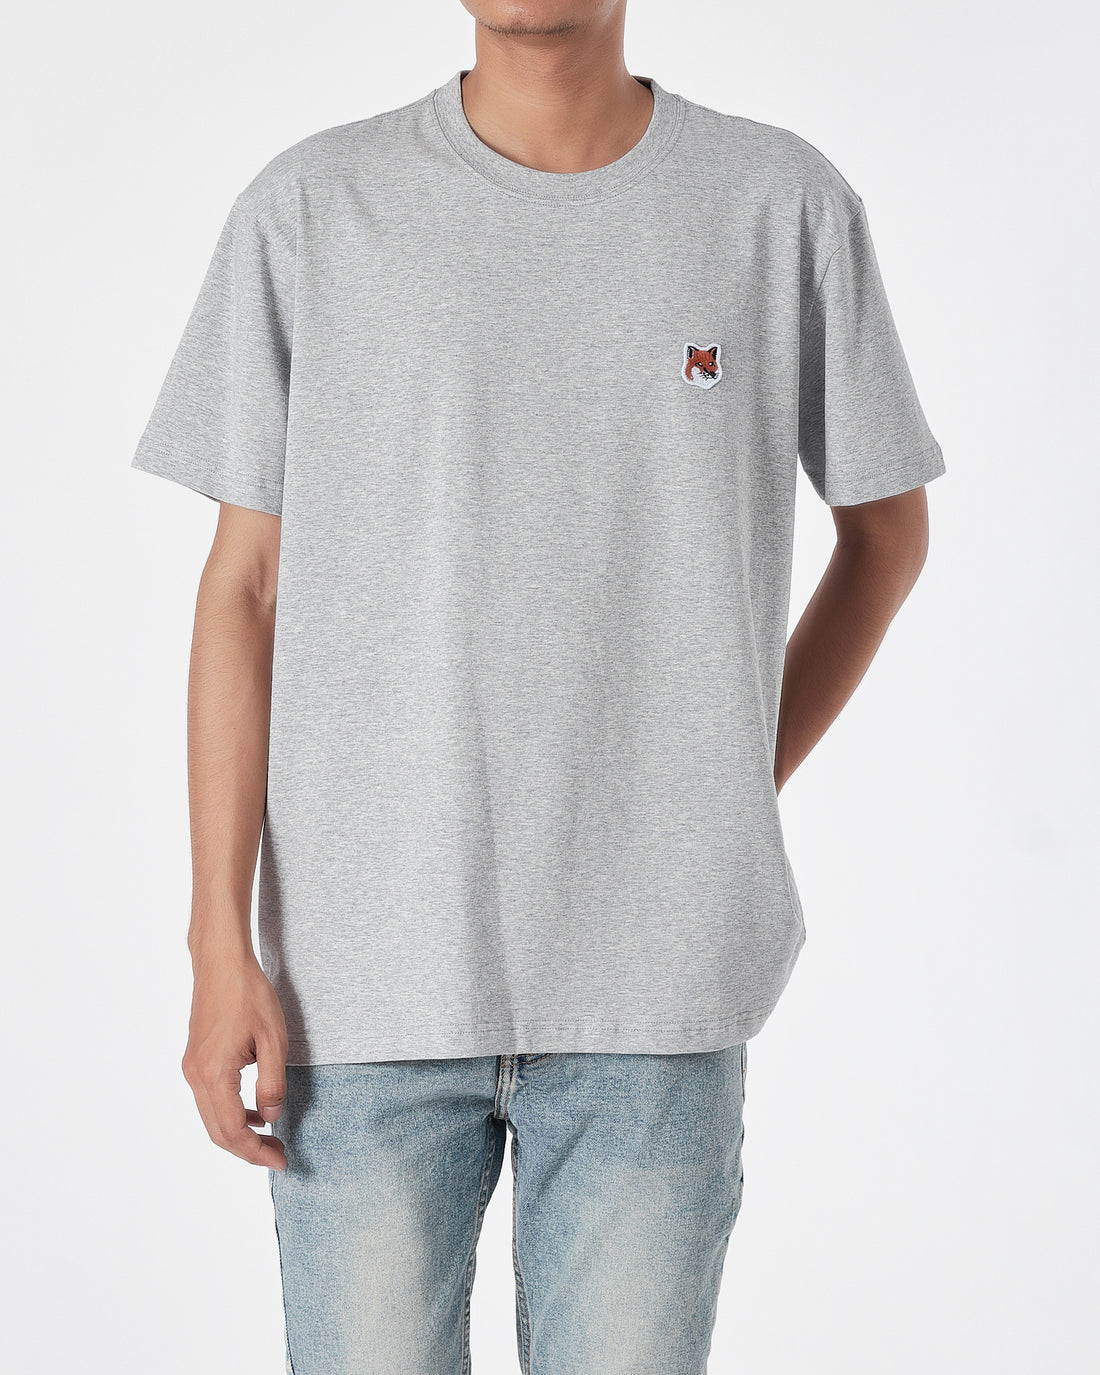 MKI Fox Embroidered Men Grey T-Shirt 14.90